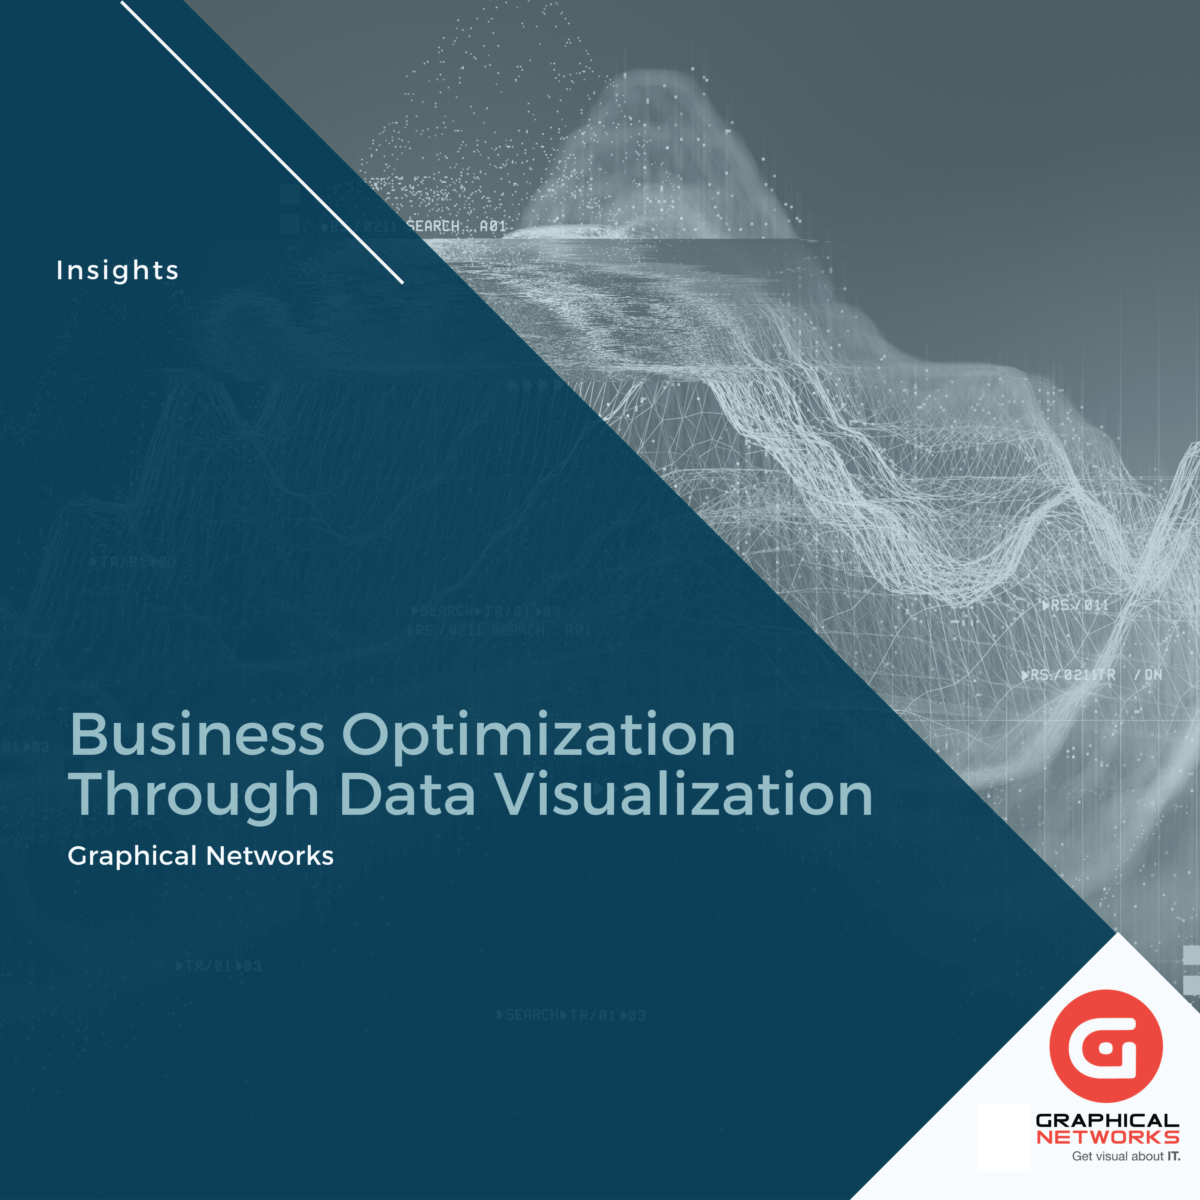 Business Optimization Through Data Visualization